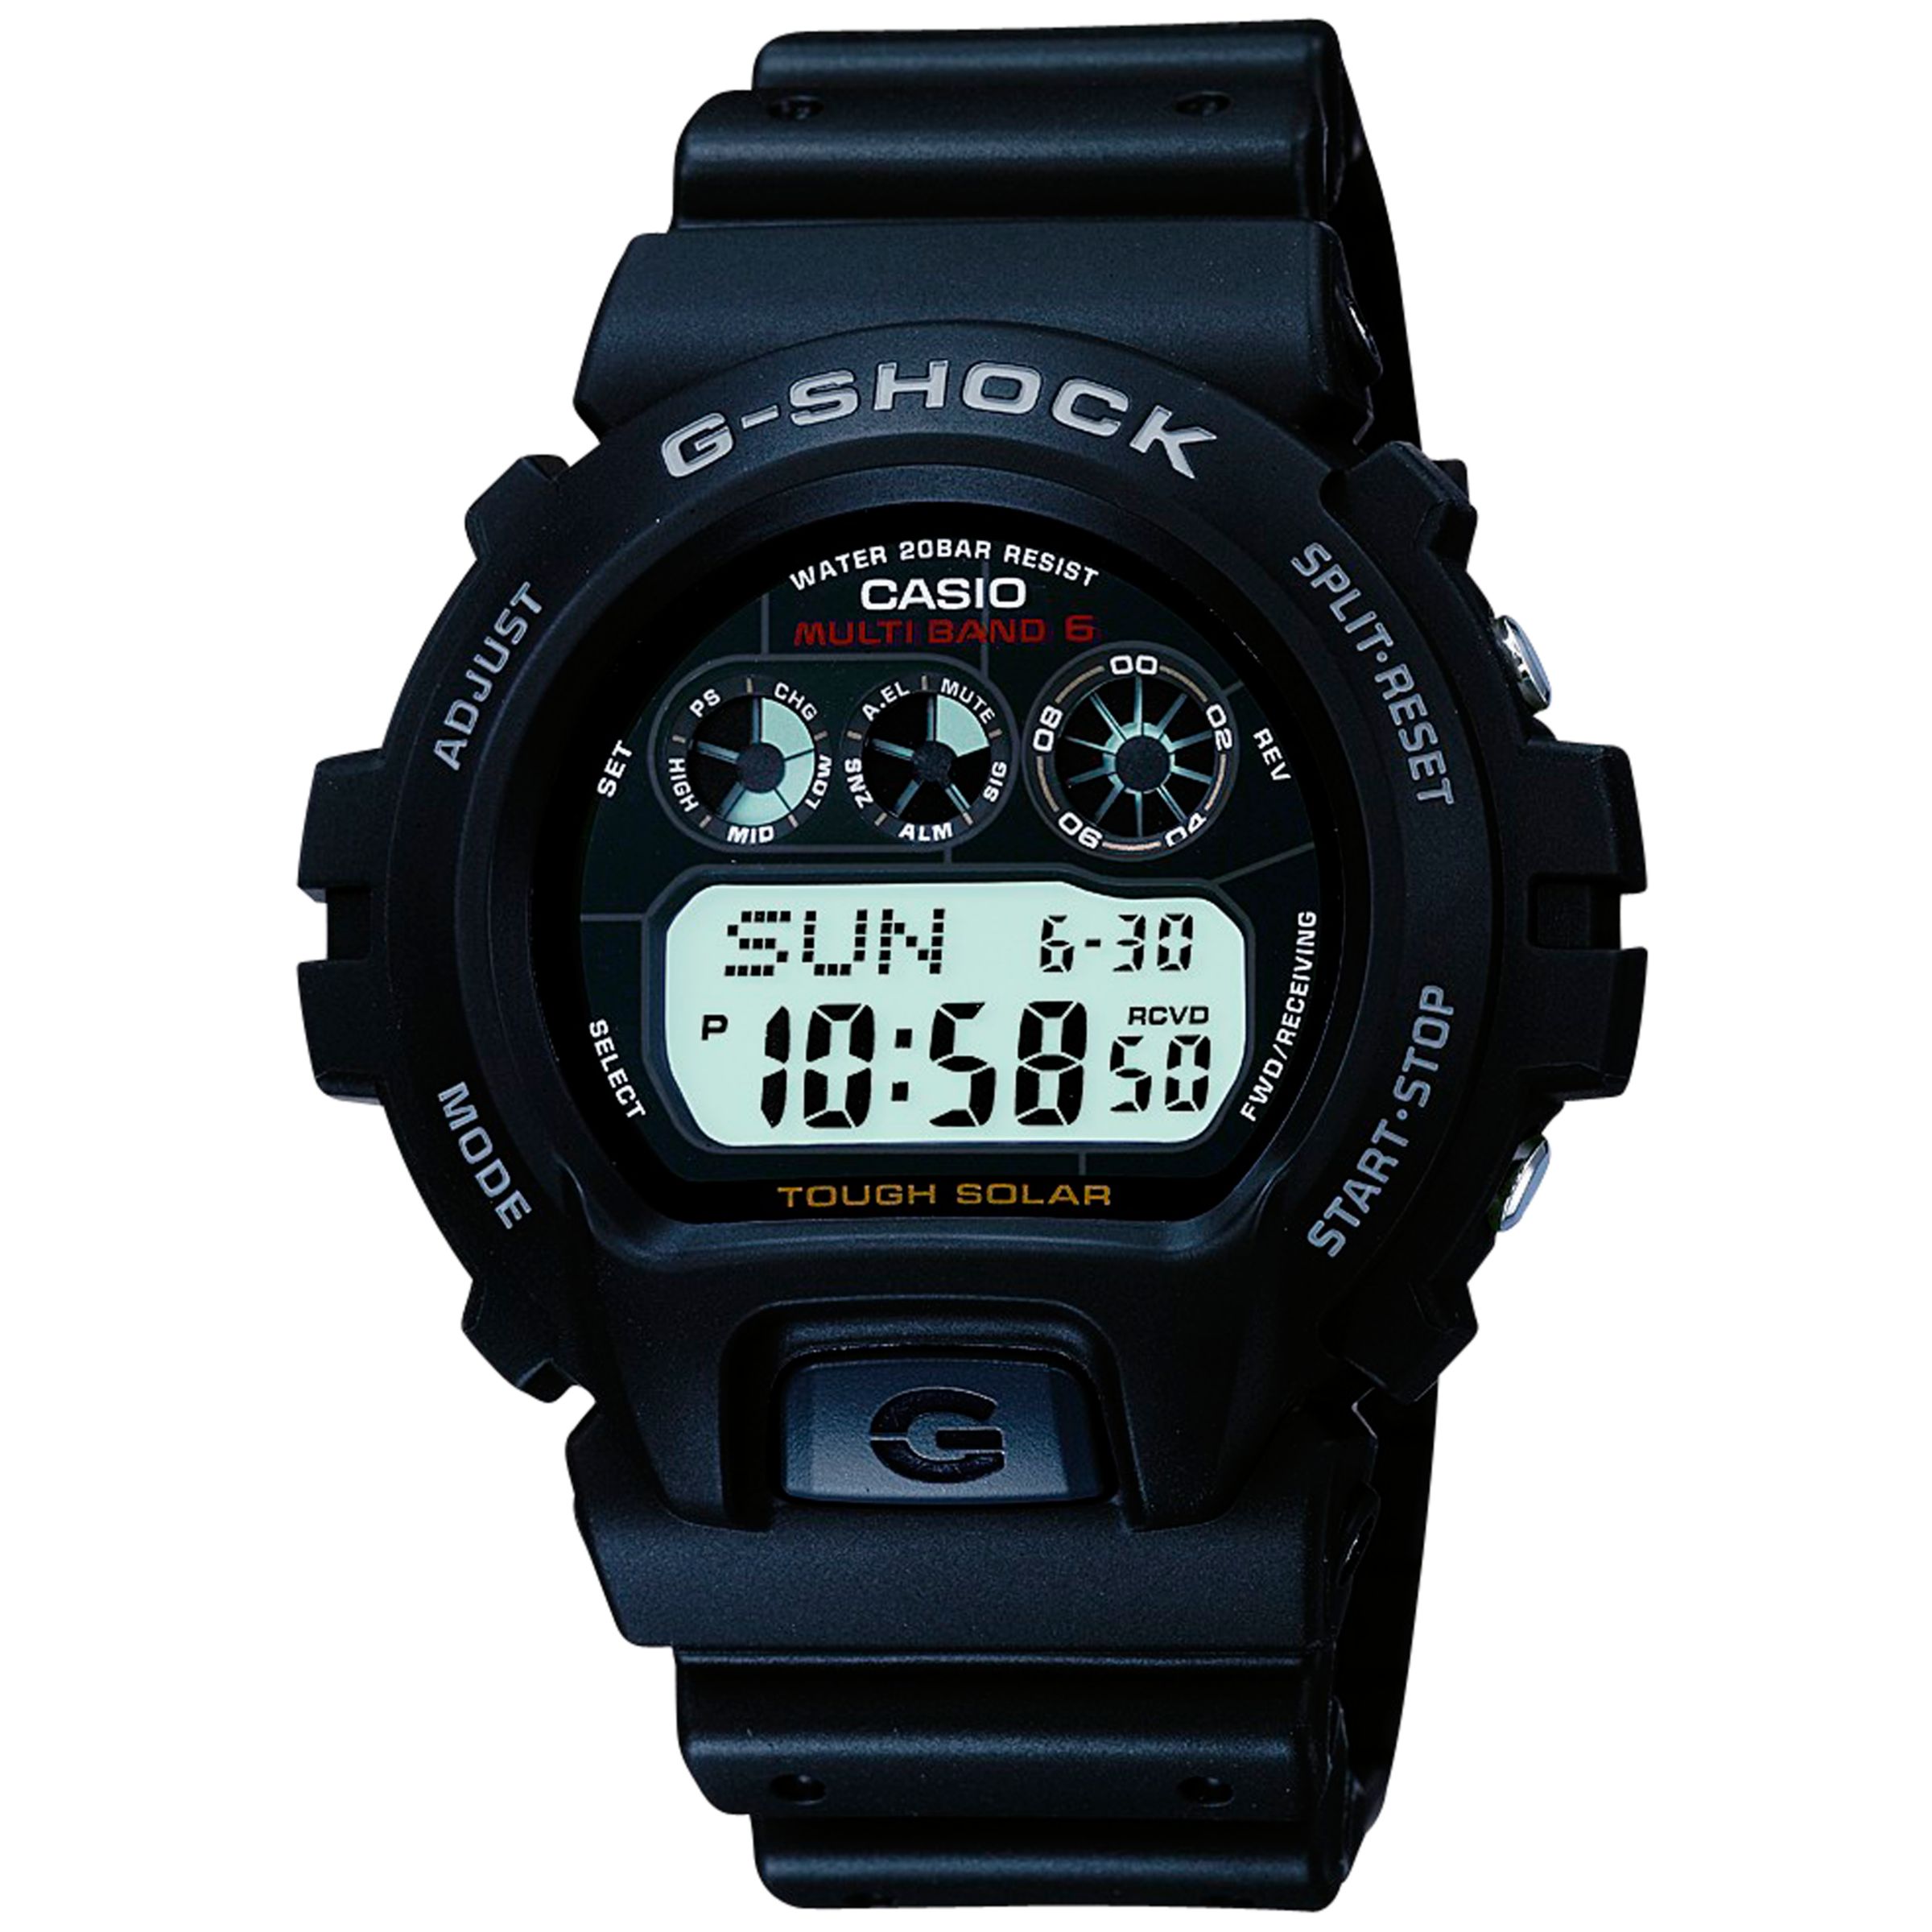 Casio GW-6900-1ER G-Shock Mens Watch, Black